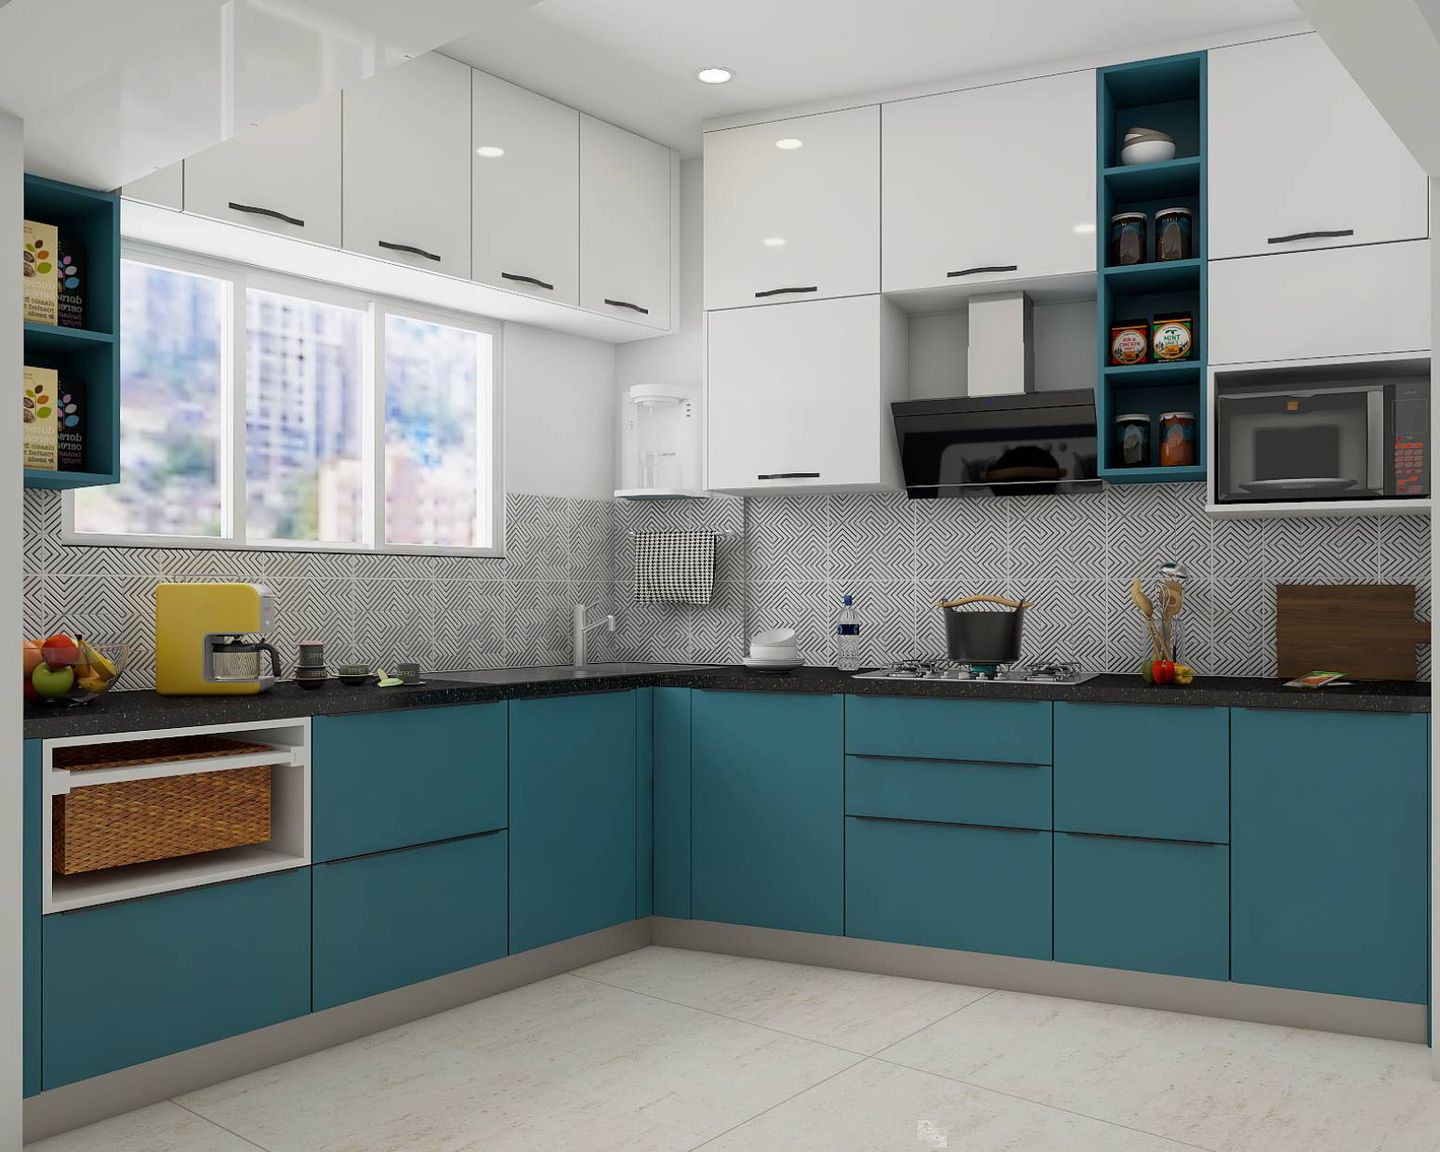 Compact Kitchen Design With Dado Tiles - Livspace